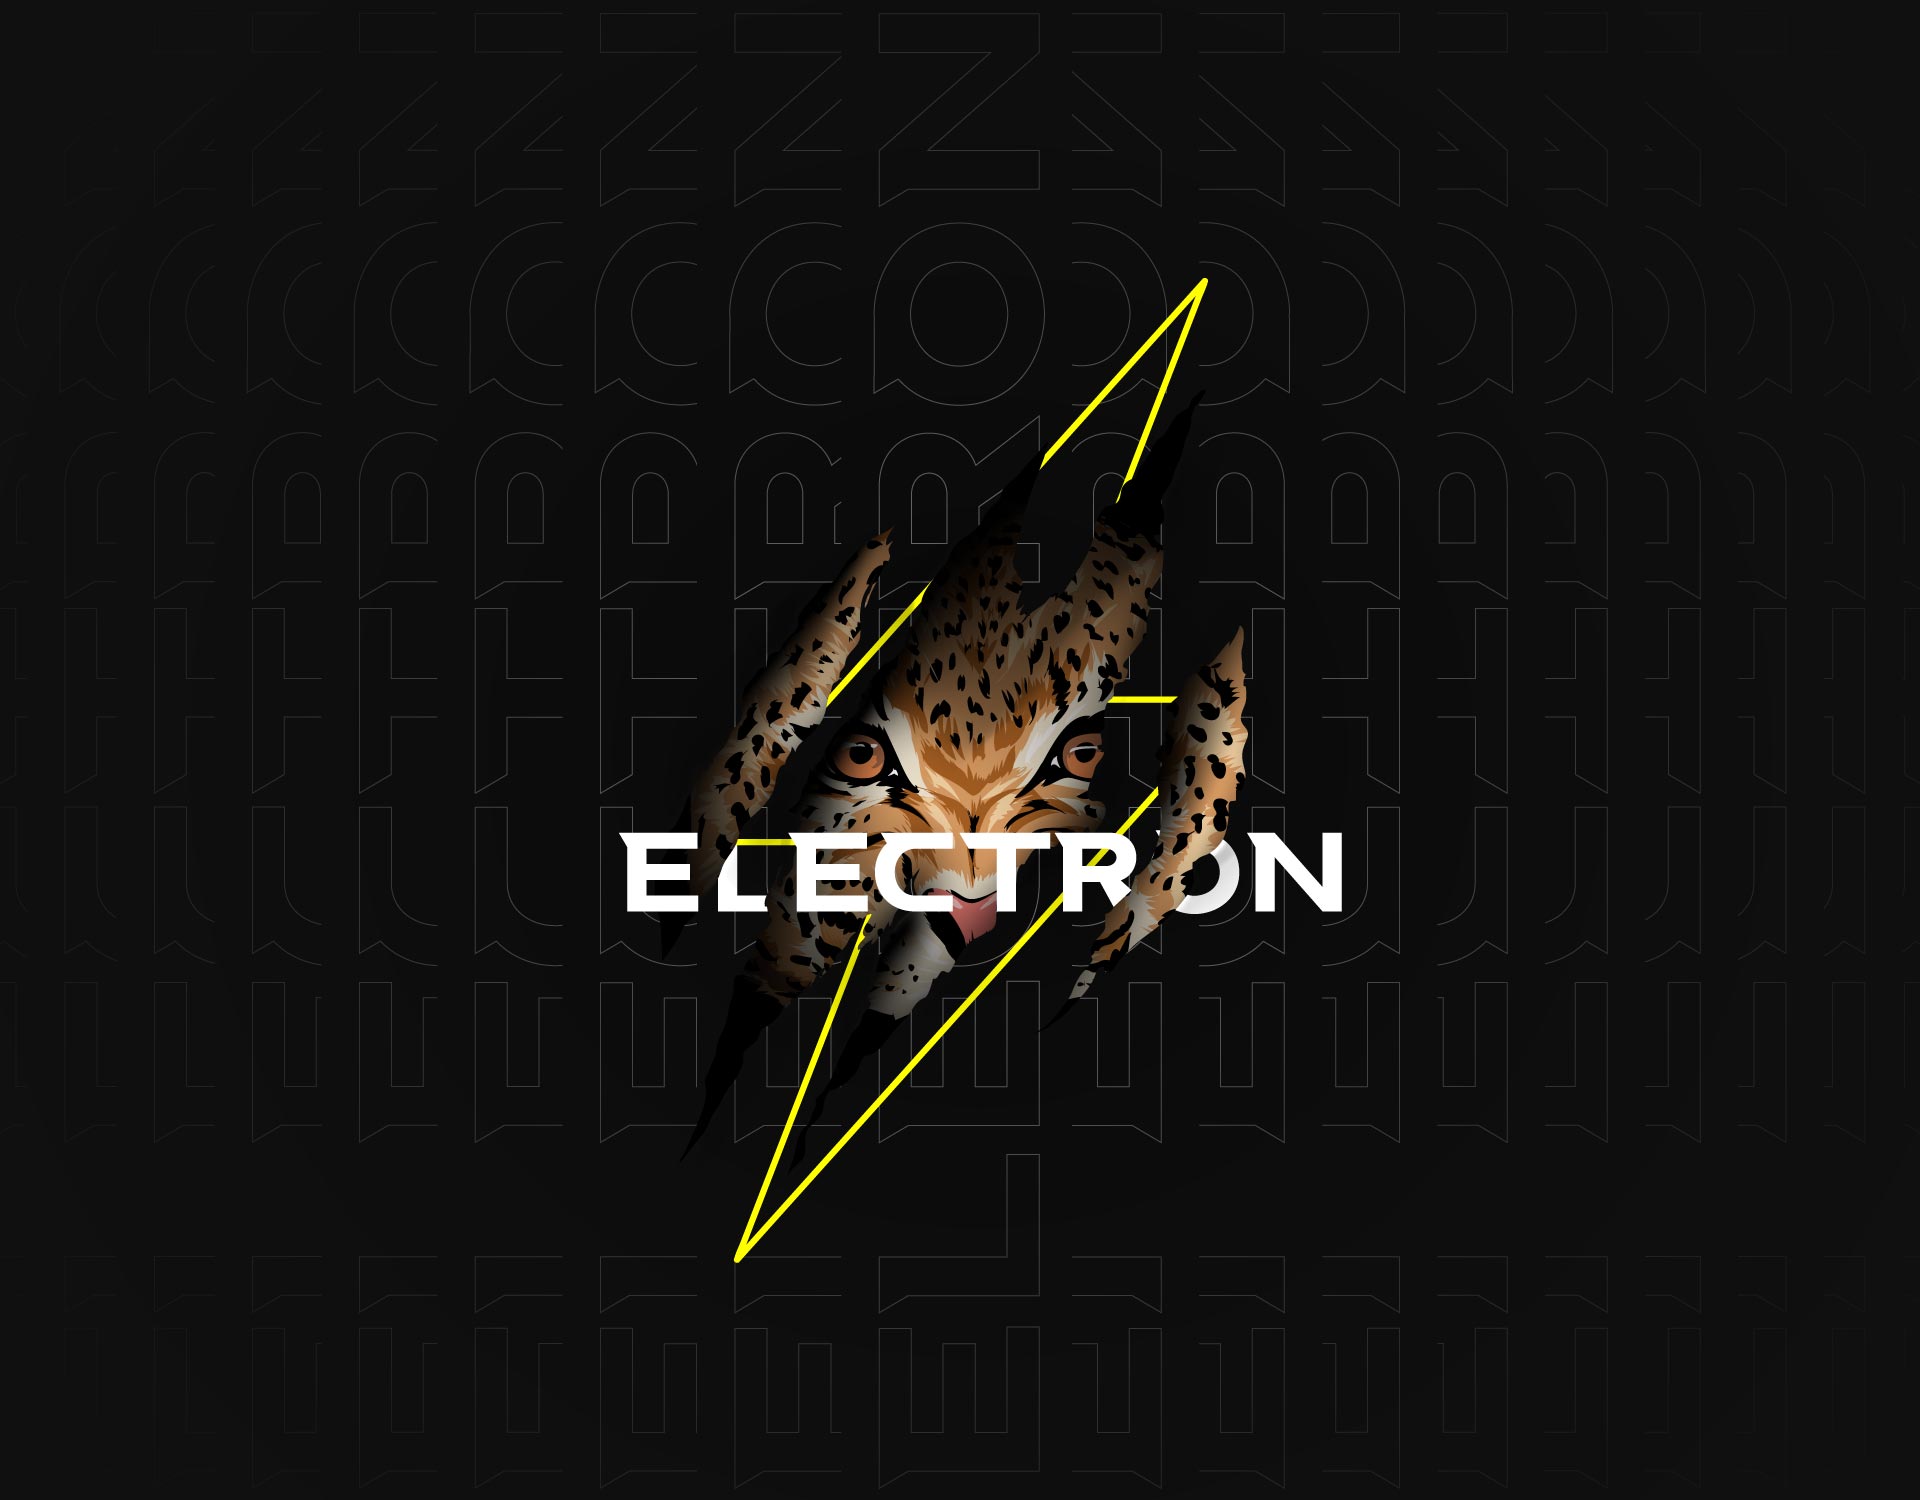 Electron Energy Drink – Label Design